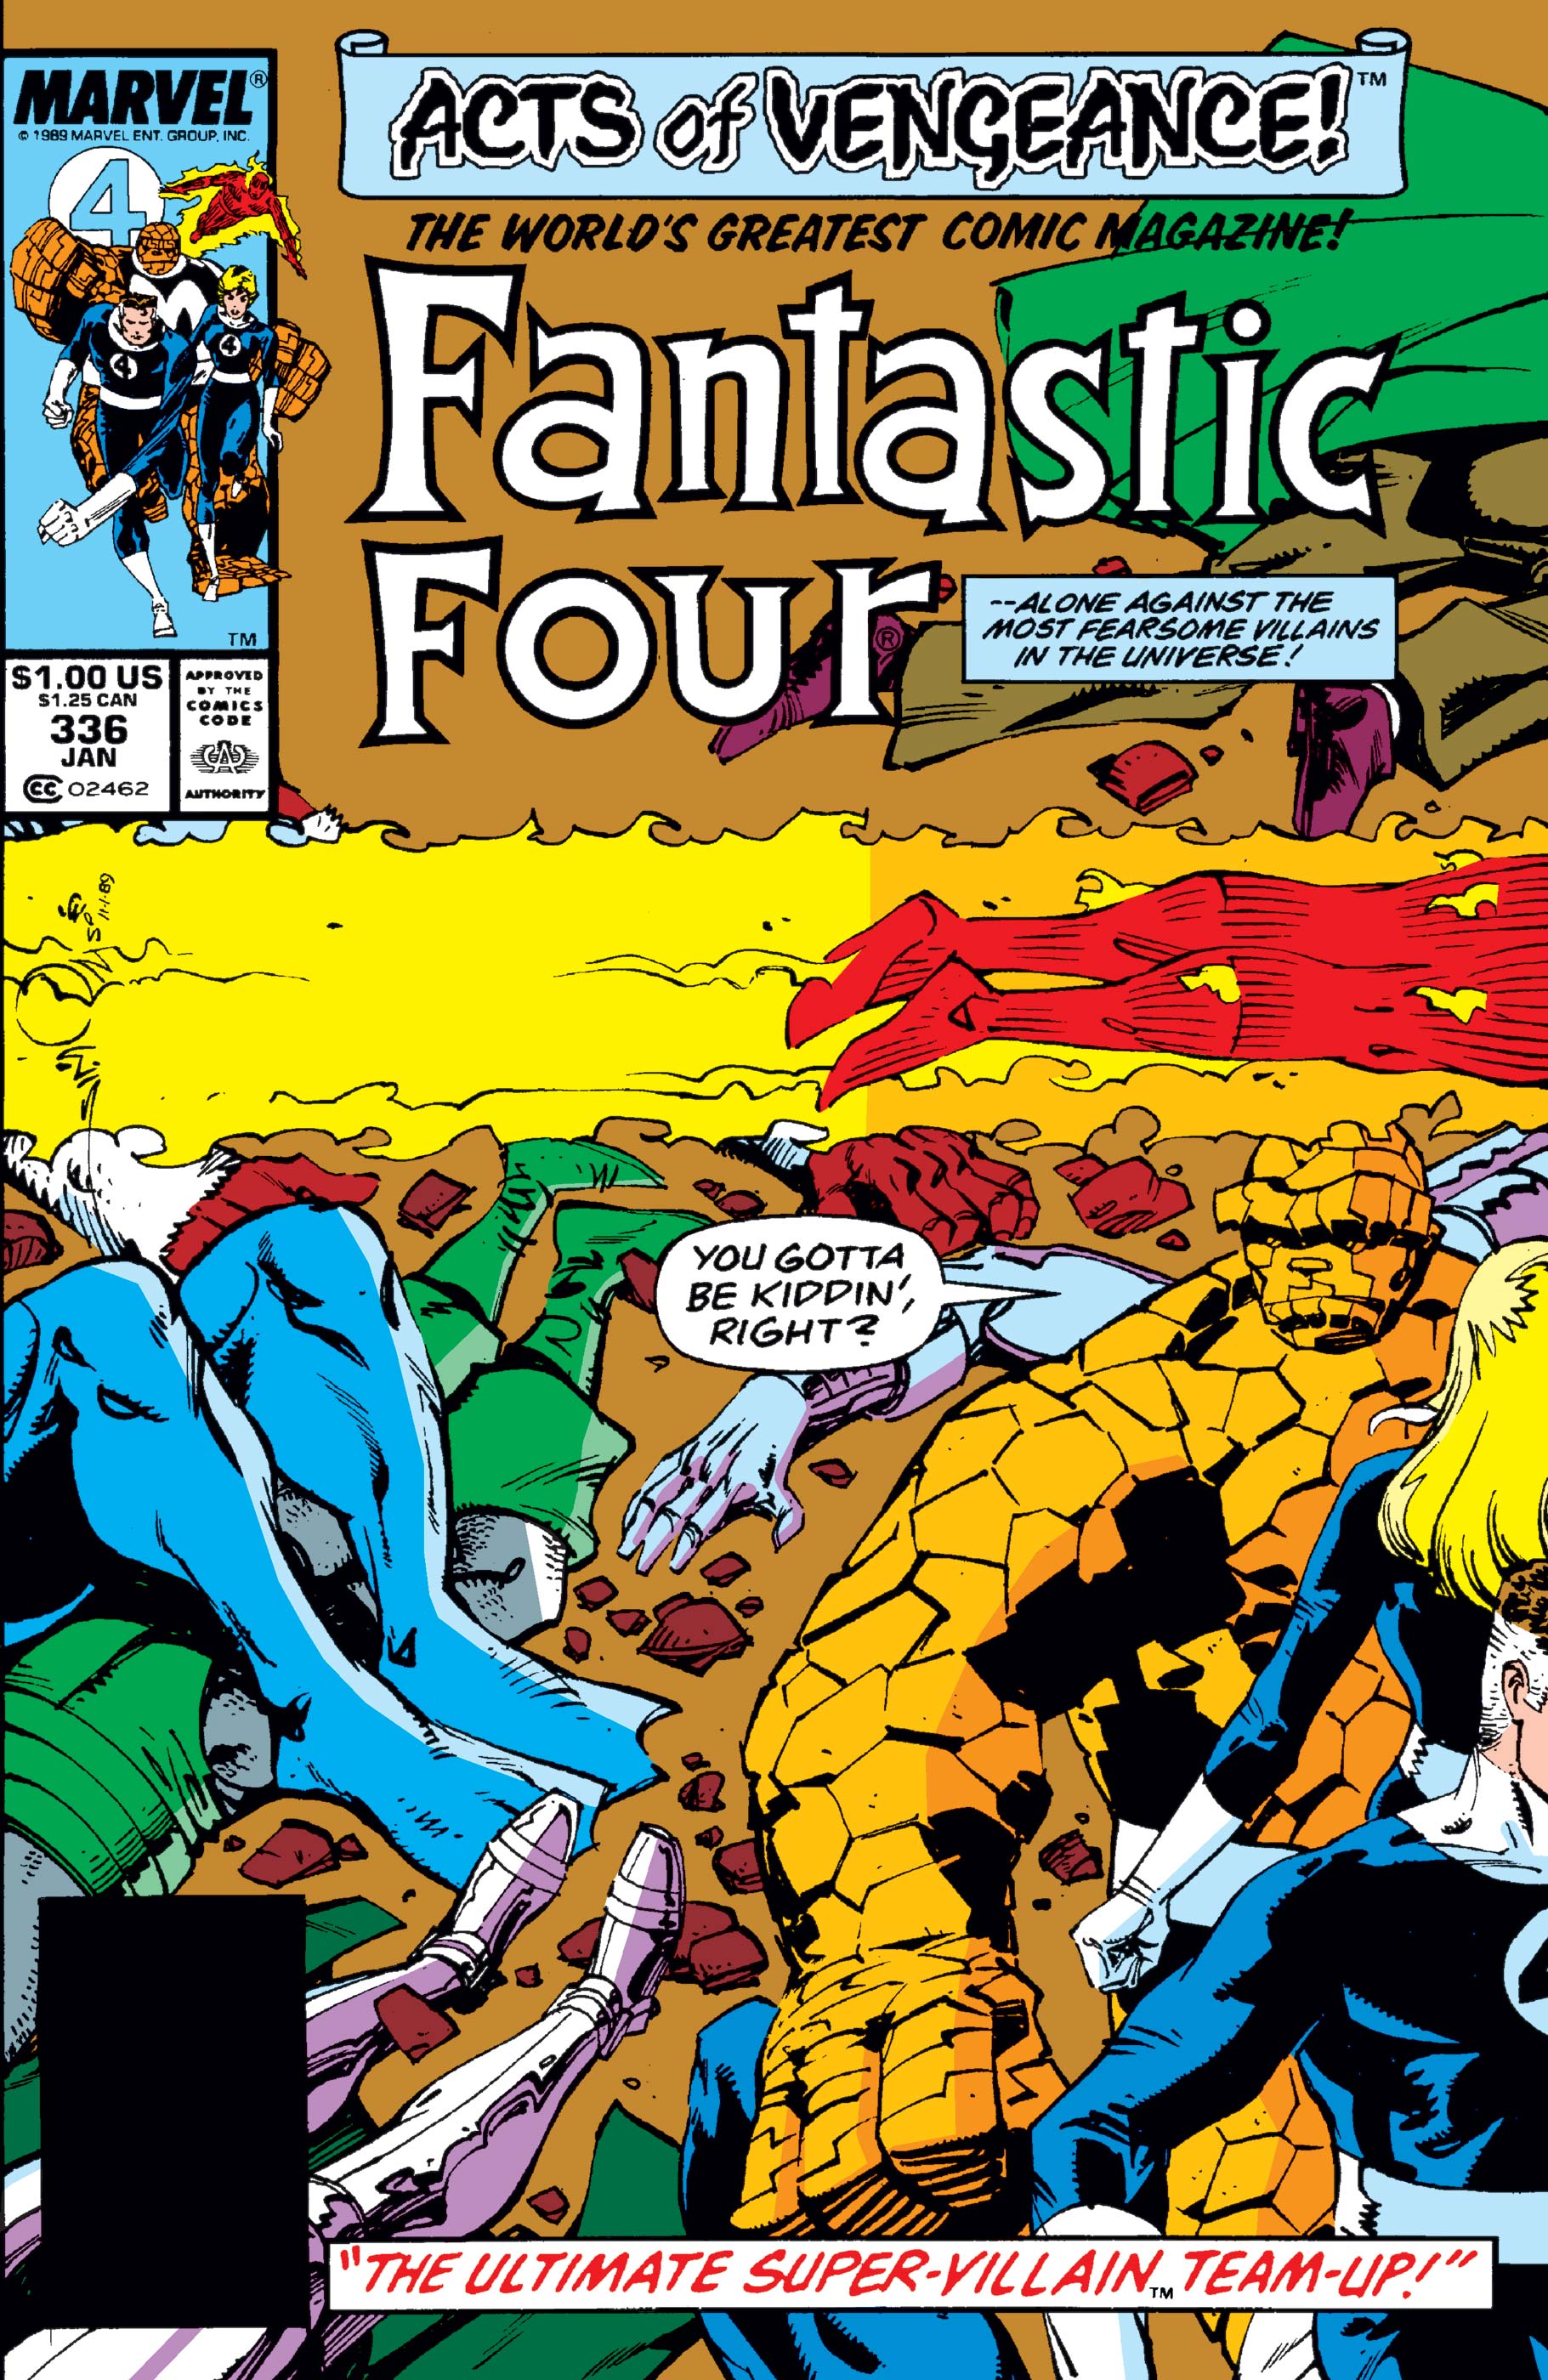 Fantastic Four (1961) #336